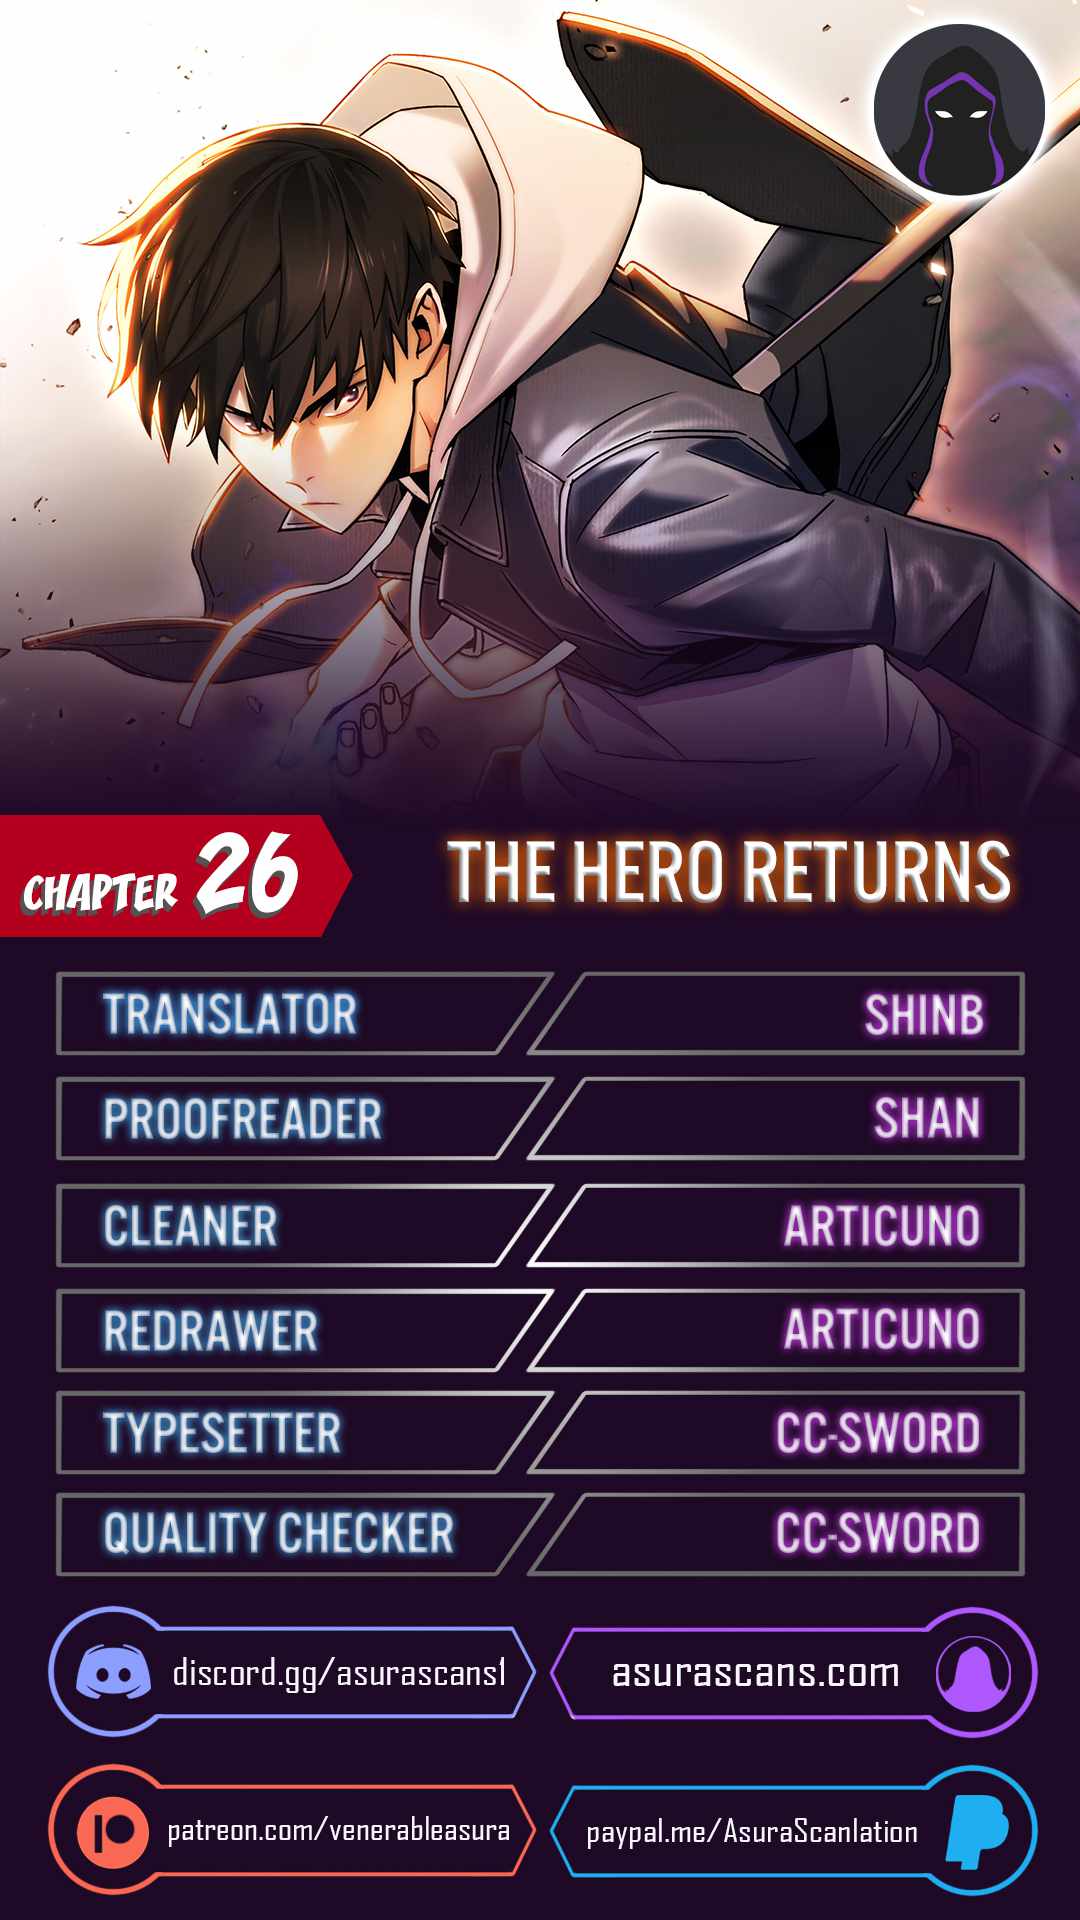 The Hero Returns chapter 26